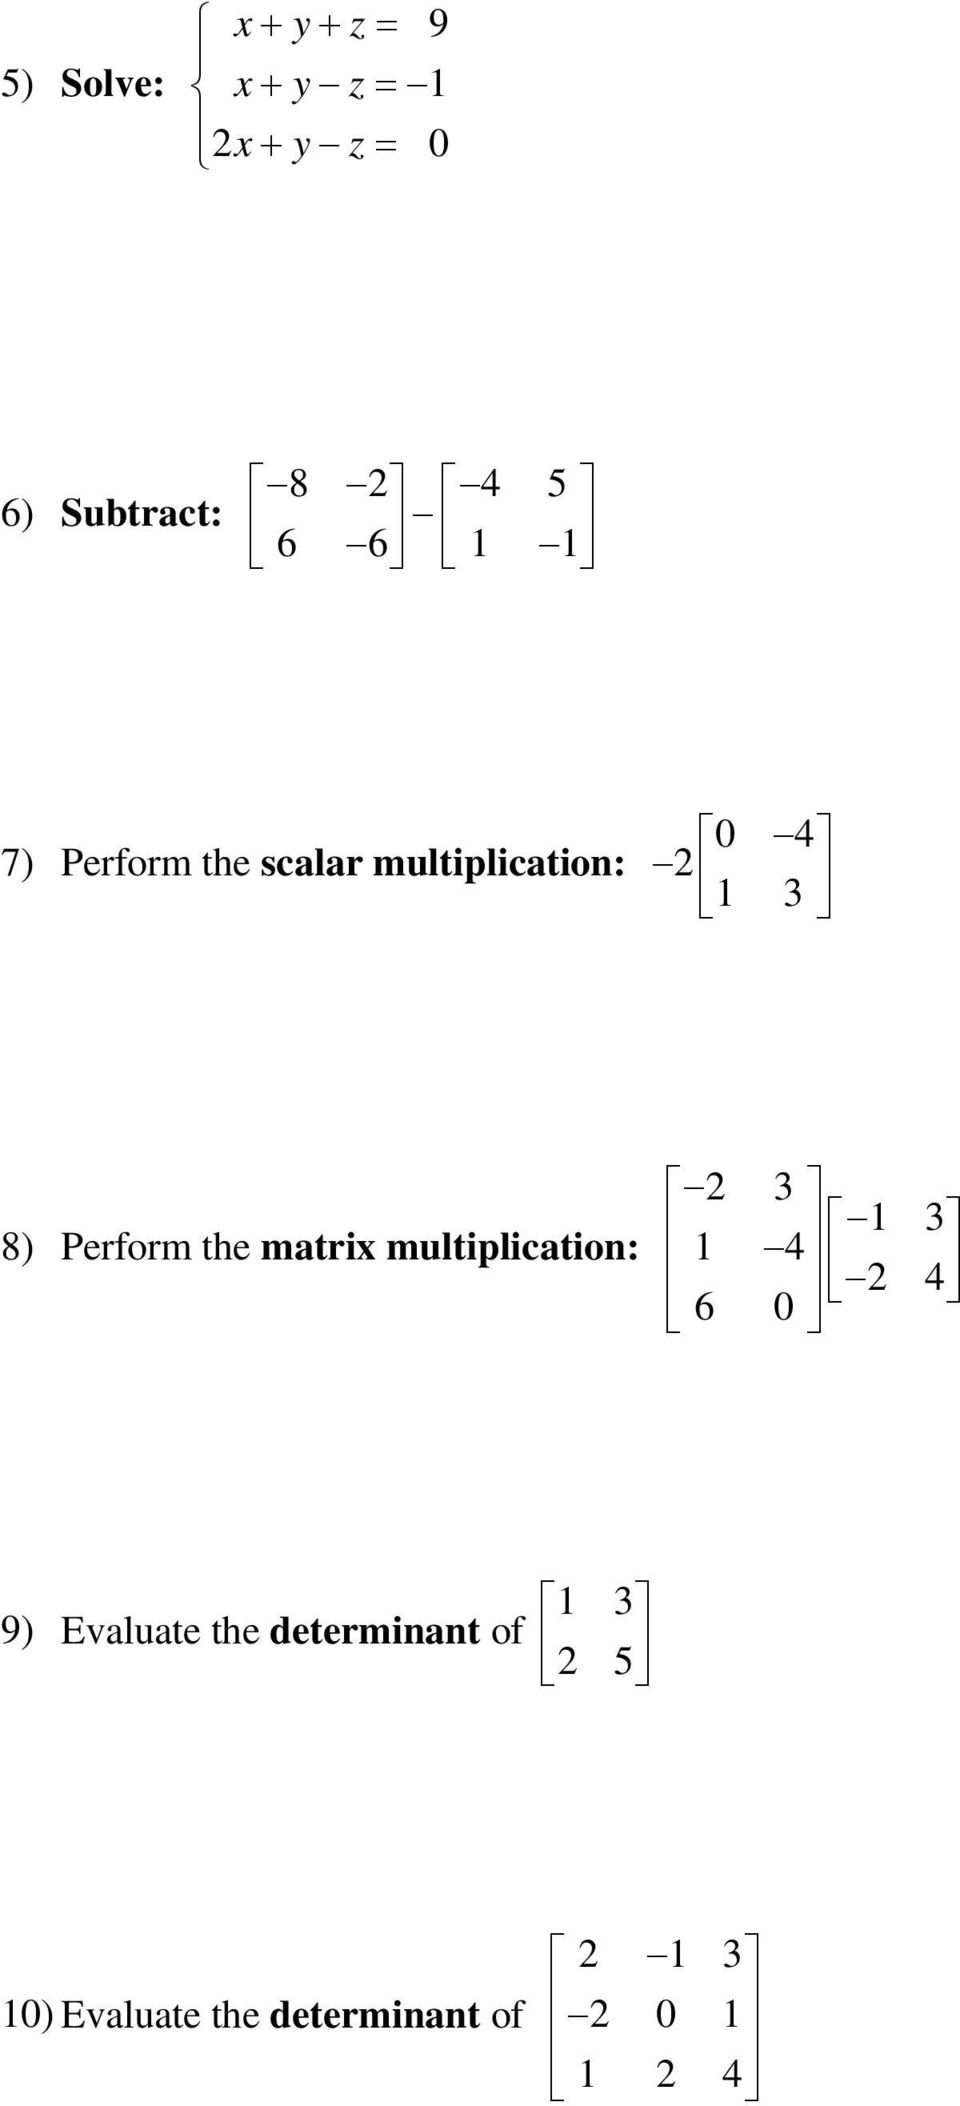 Perform the matri multiplication: 3 1 3 1 4 4 6 0 9) Evaluate